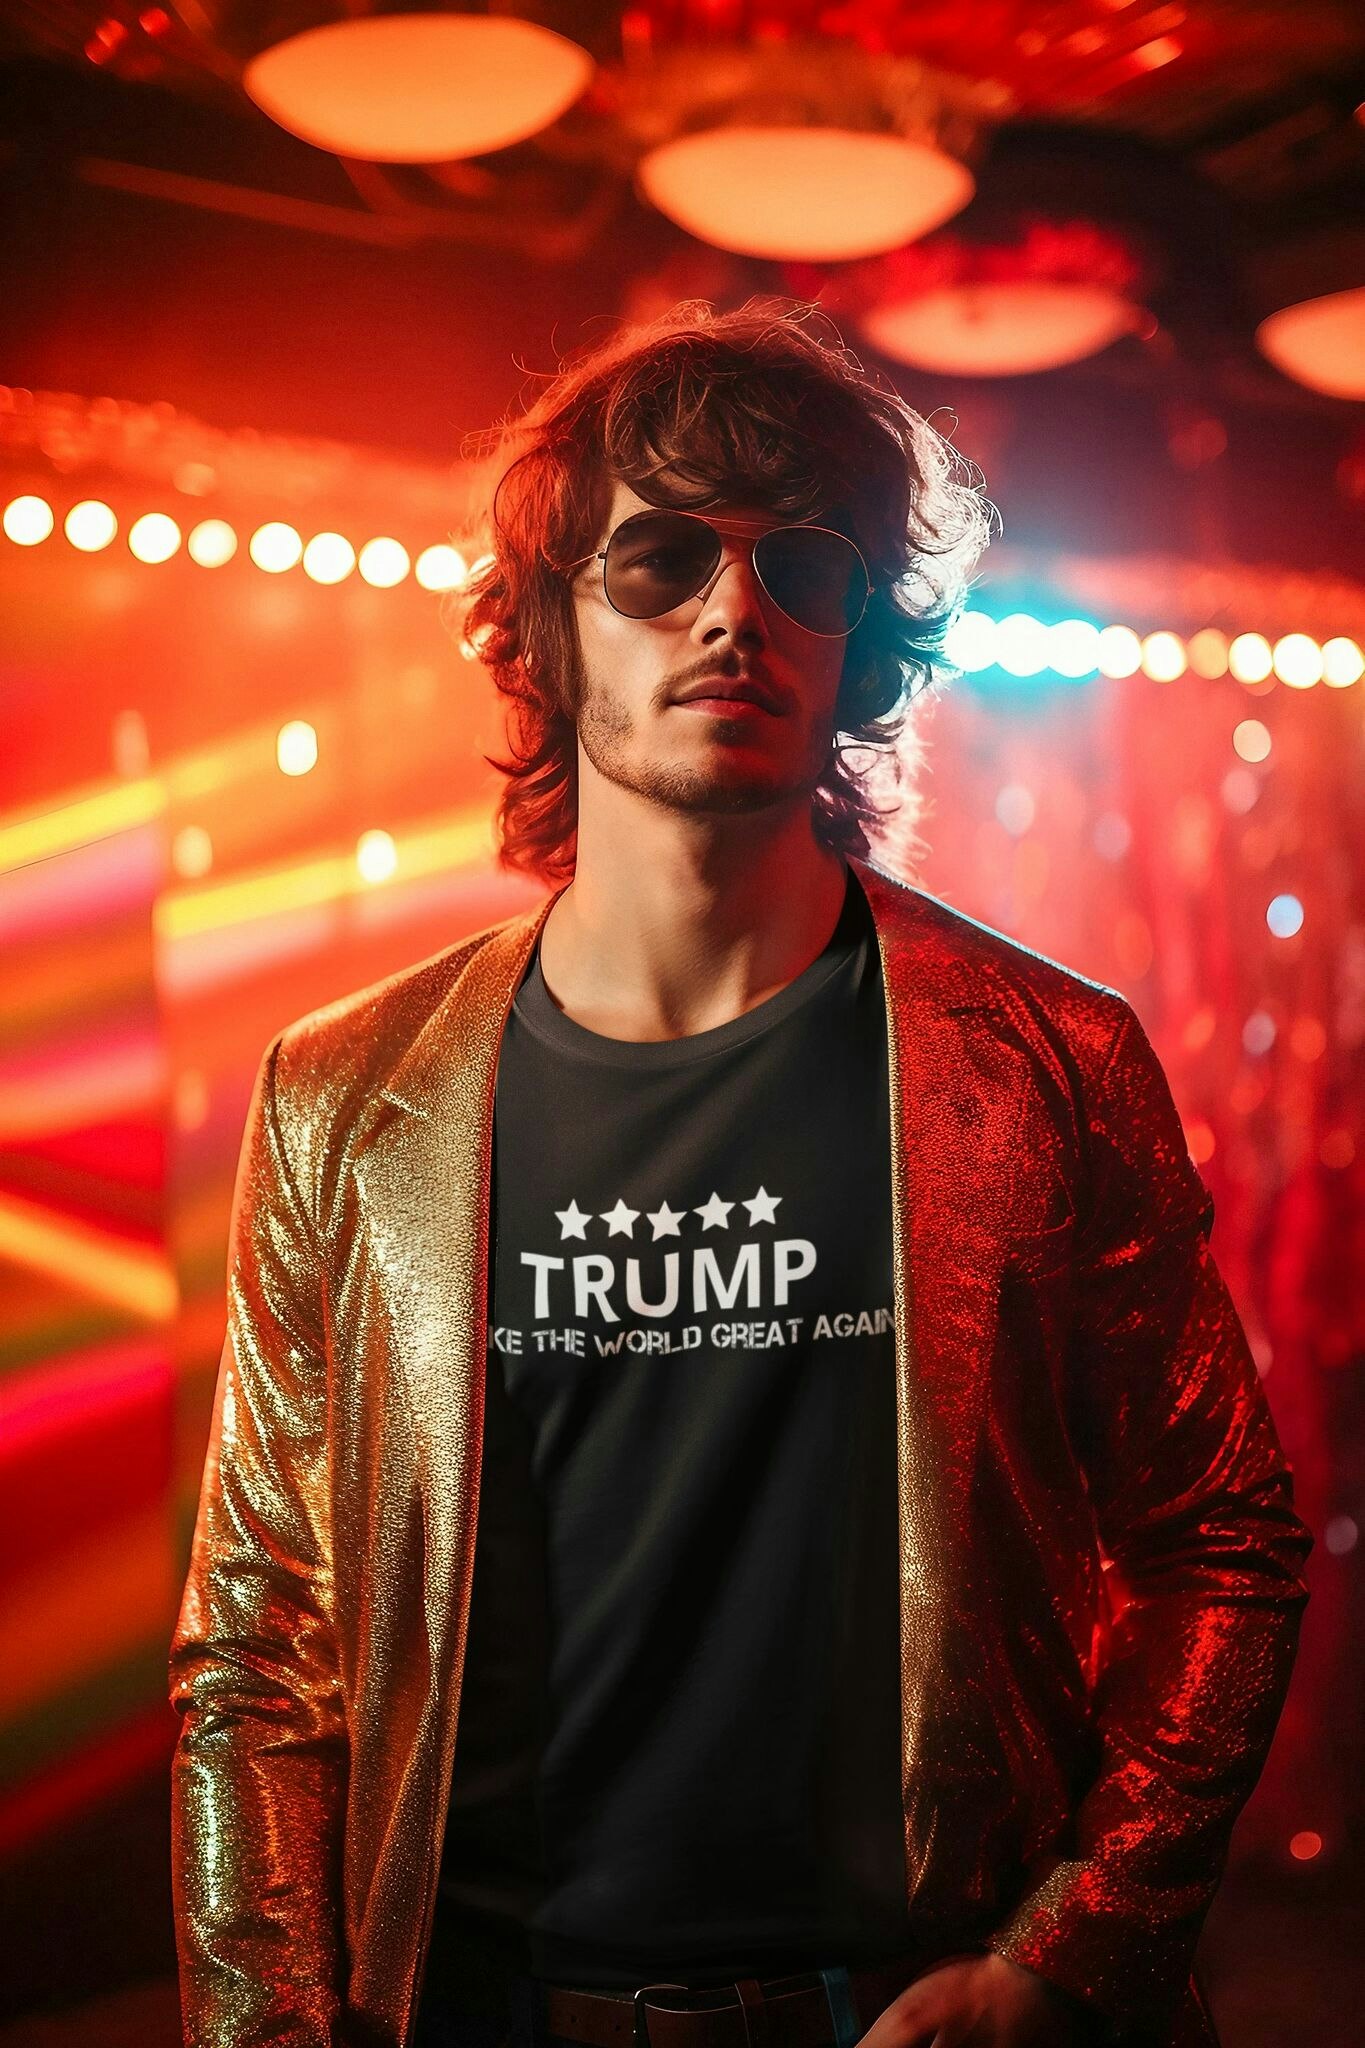 Trump Support T-Shirt. Trump Make The World Great Again,WWG1WGA